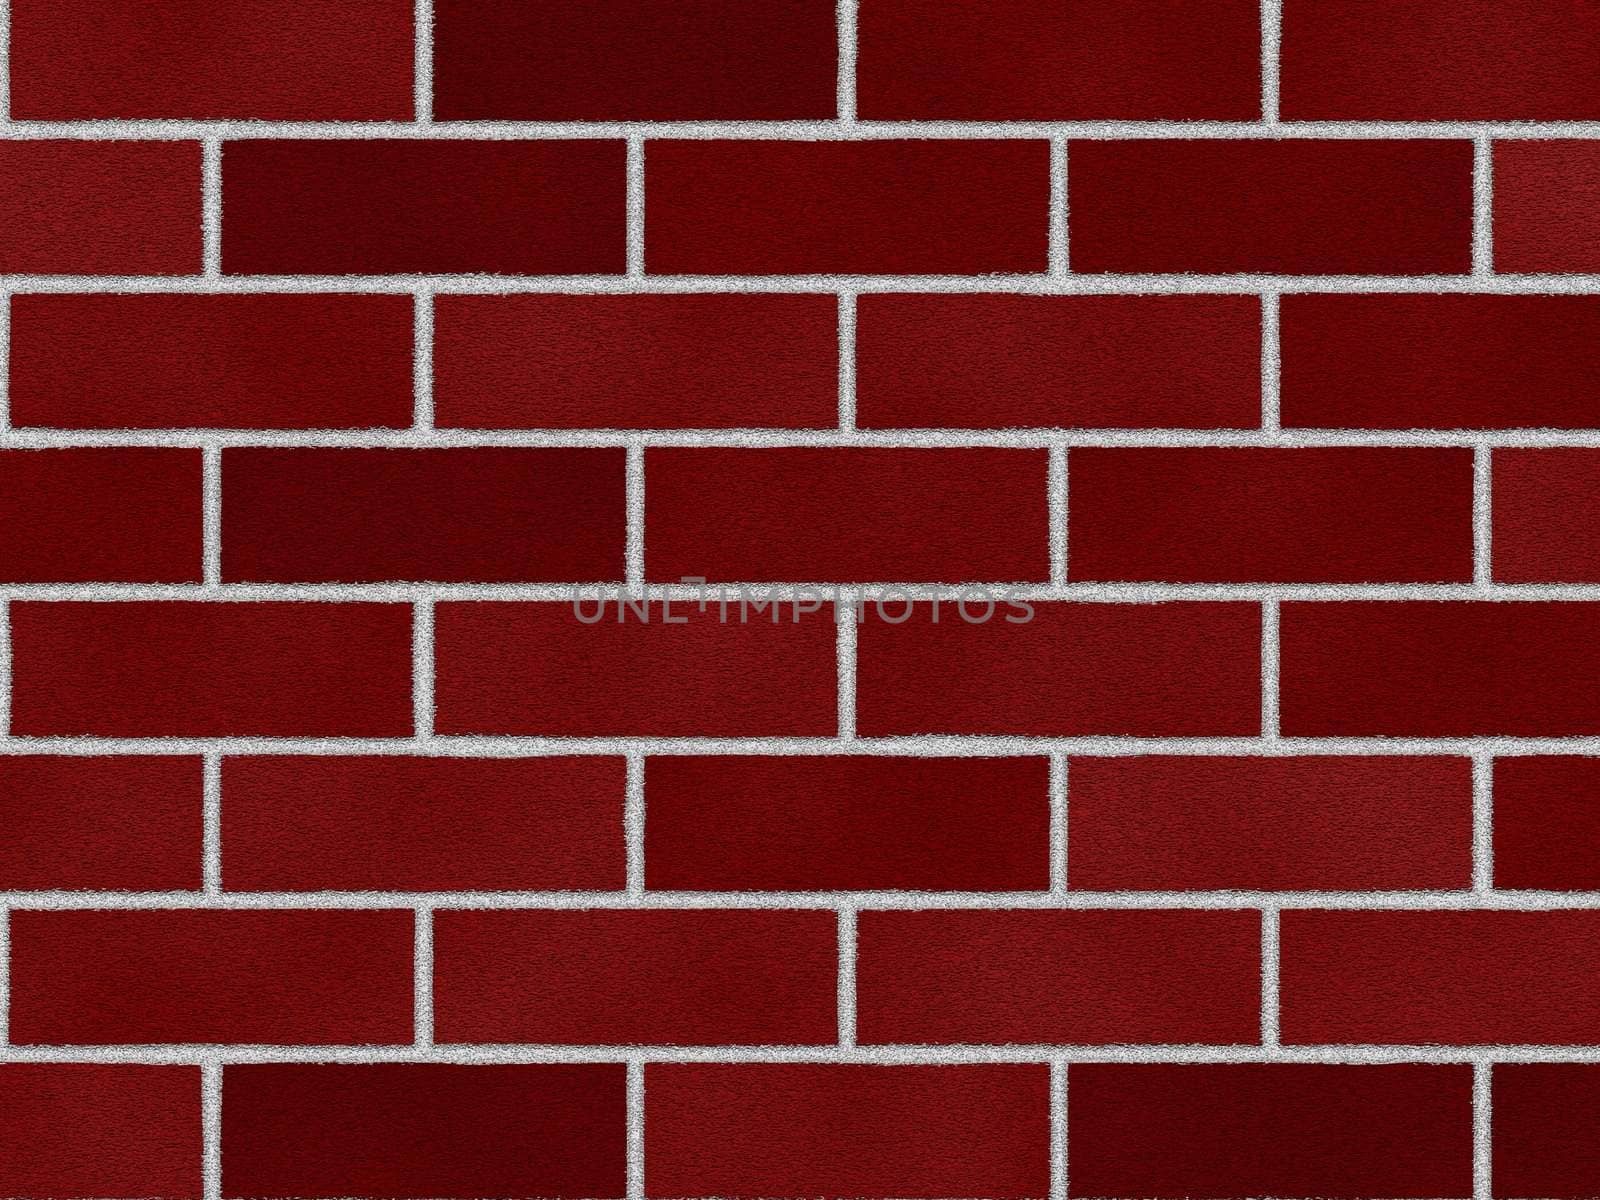  Texture stone brick wall by peromarketing